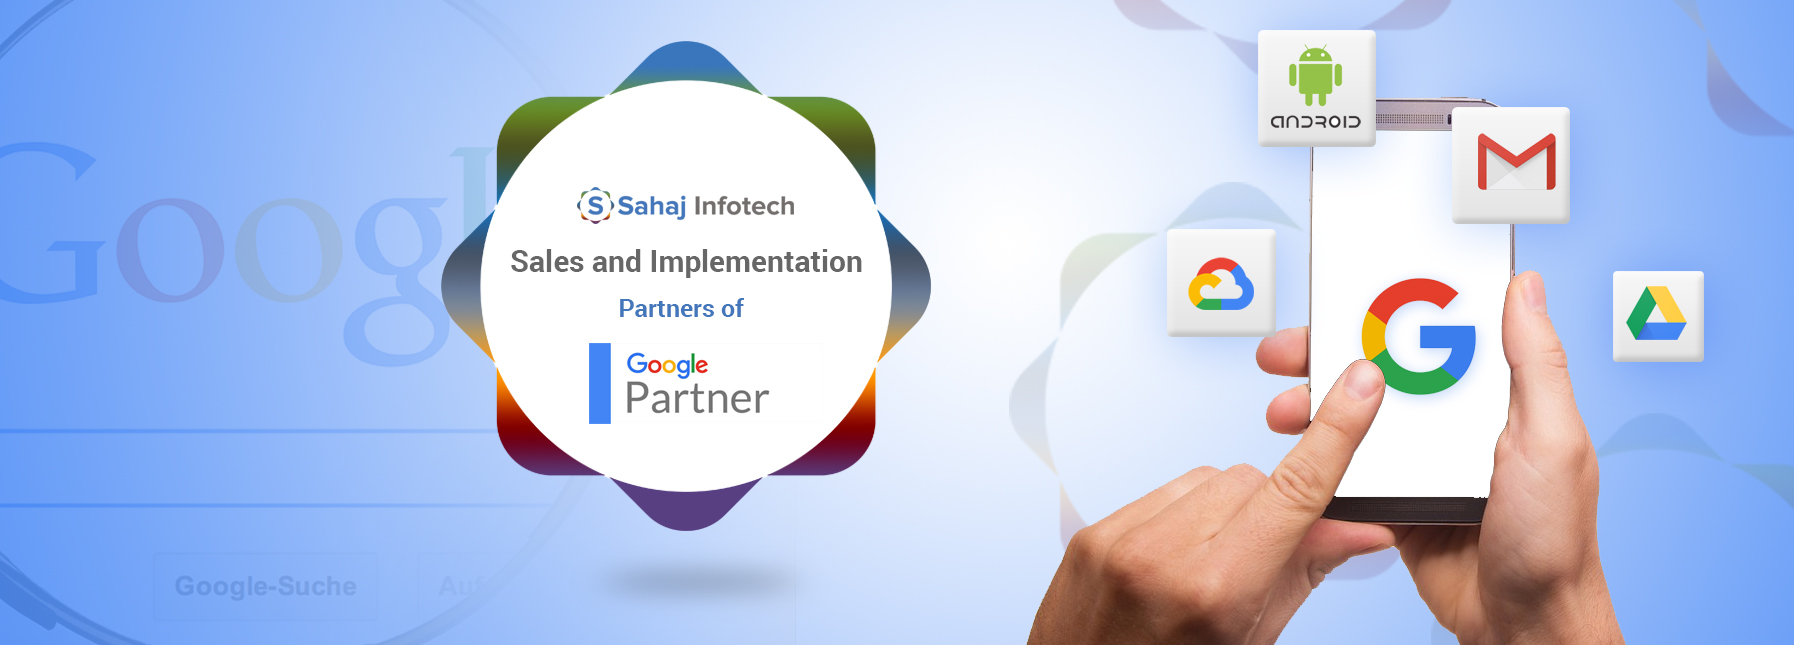 Sahaj Infotech Sales and Implementation Google Partner